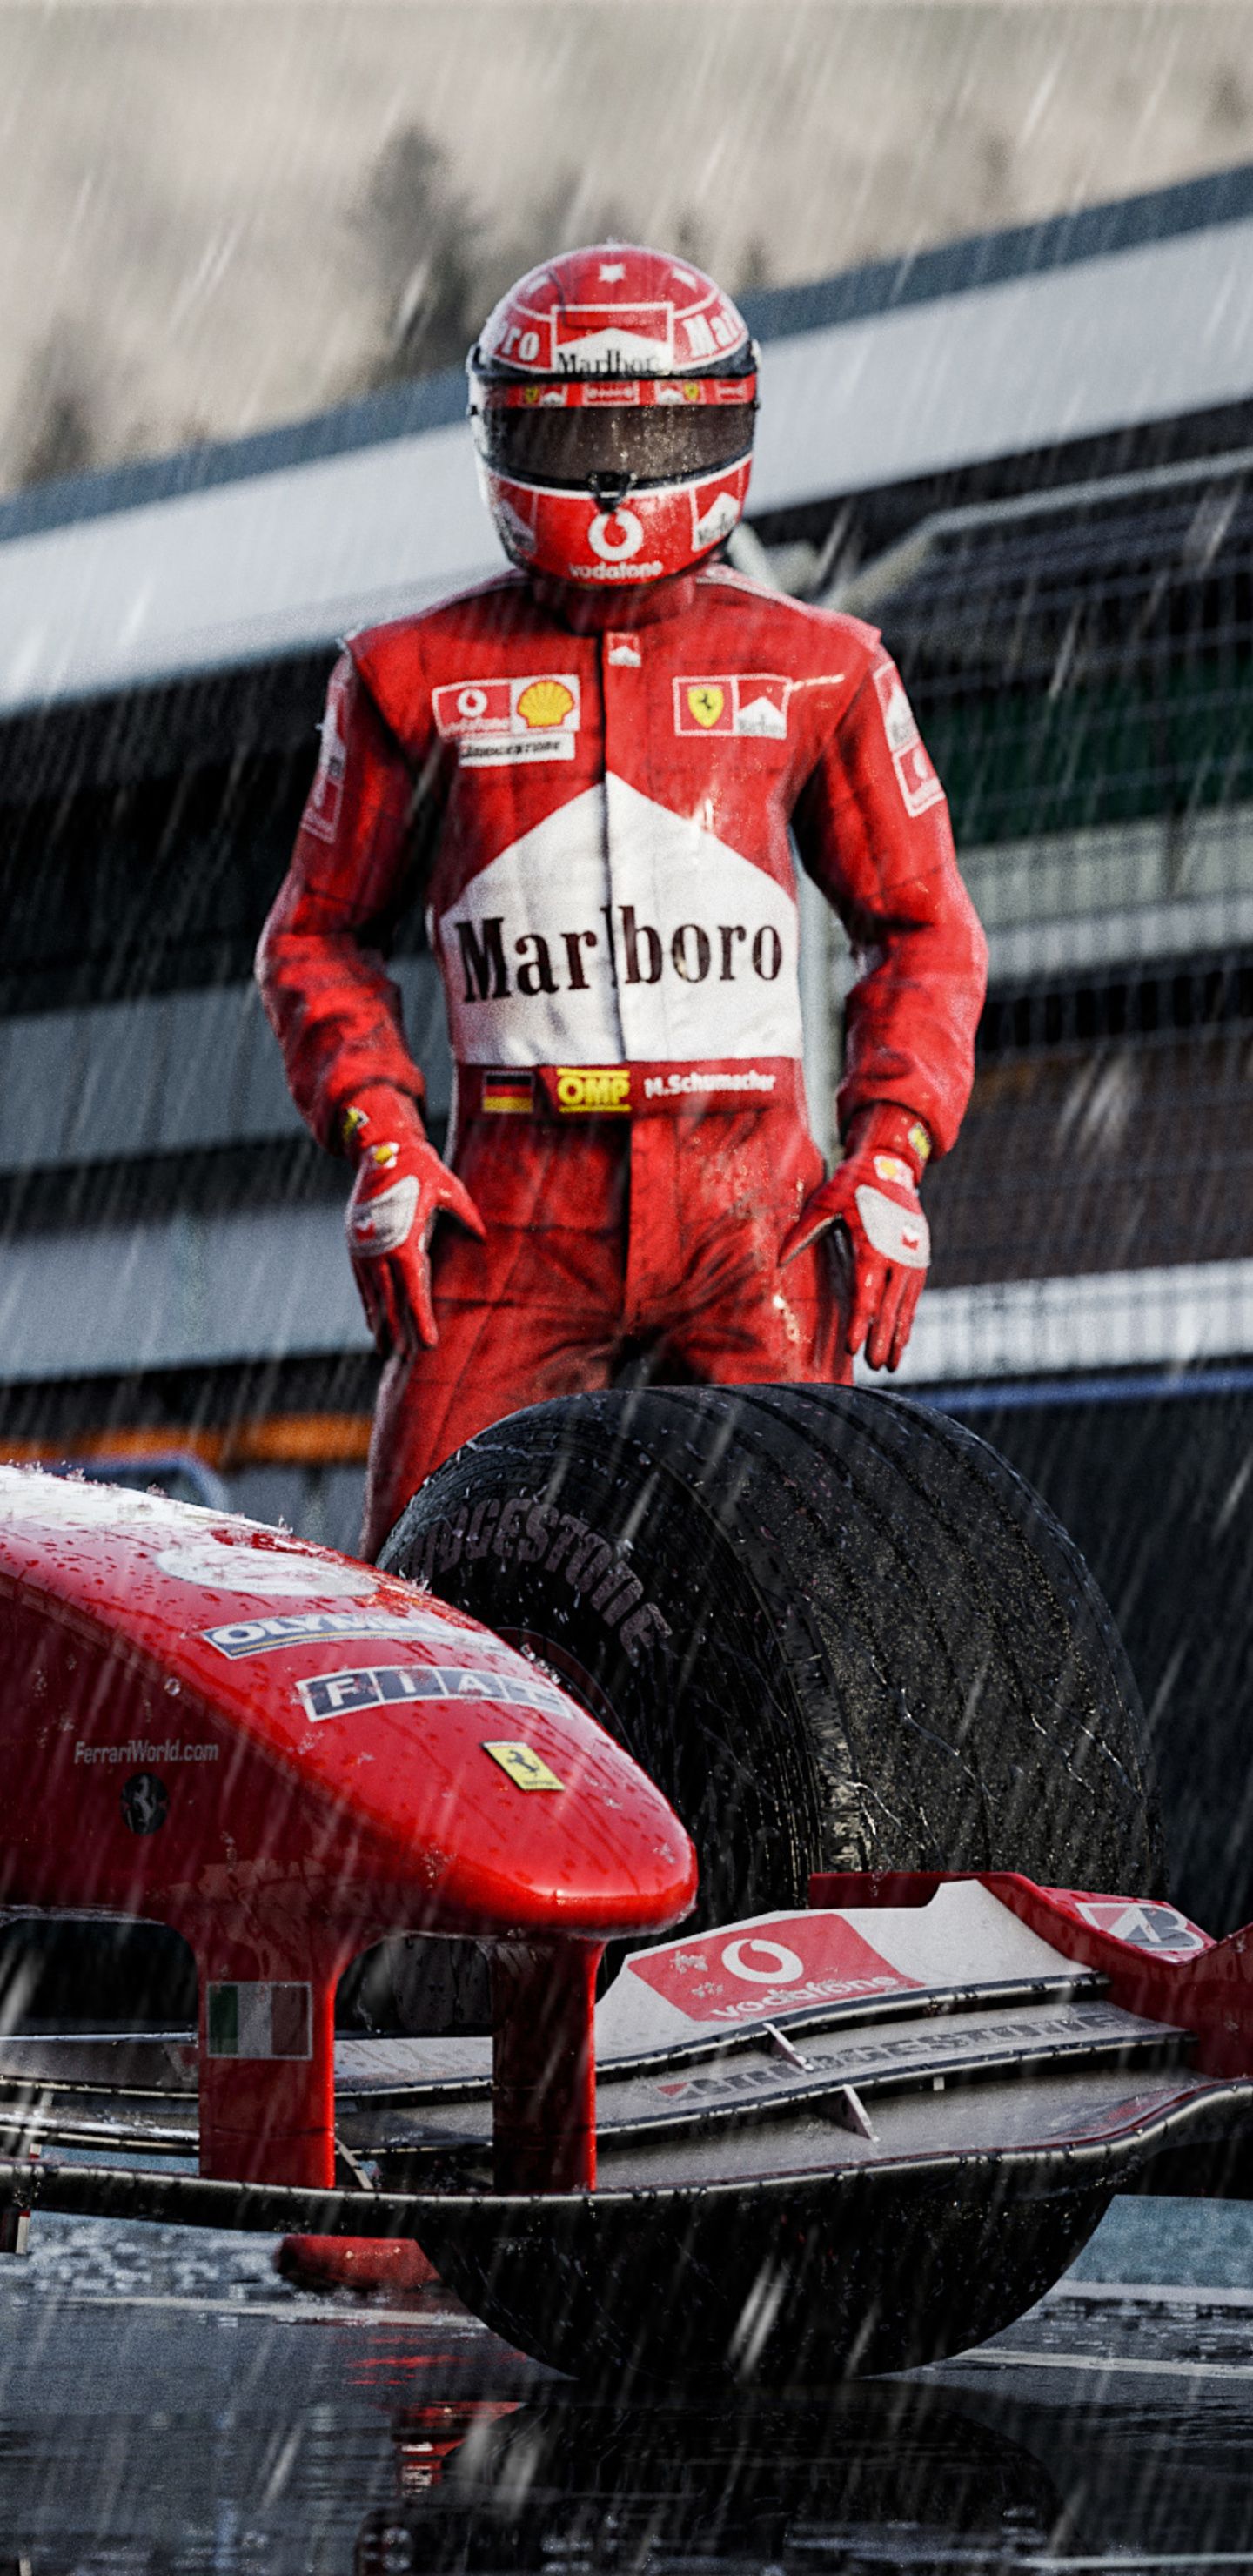 Ferrari F2004 Michael Schumacher Samsung Galaxy Note S S SQHD HD 4k Wallpaper, Image, Background, Photo and Picture